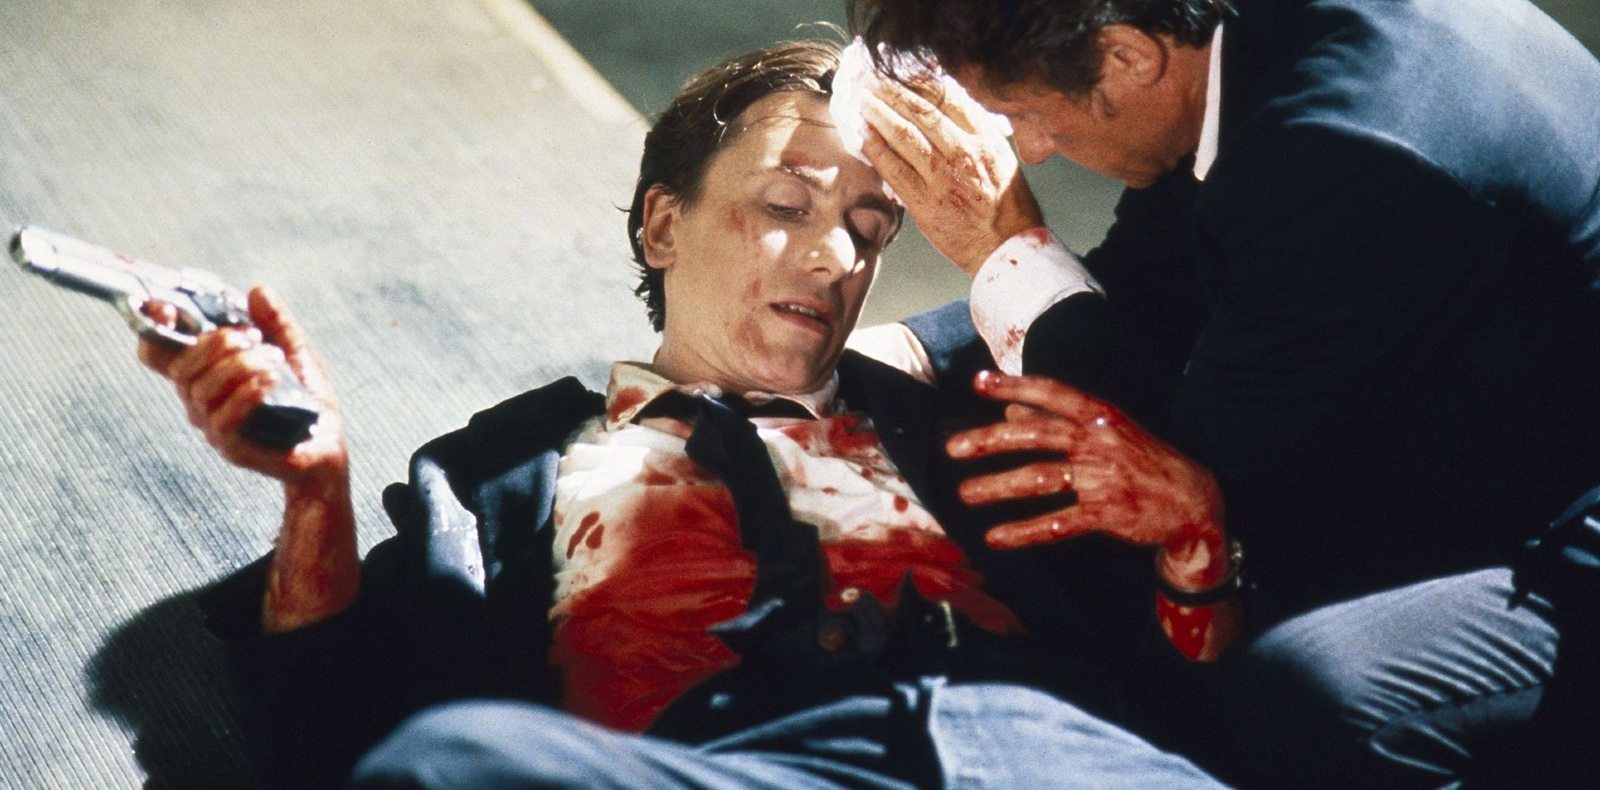 Tim Roth et Harvey Keitel dans "Reservoir Dogs" (1992) de Quentin Tarantino